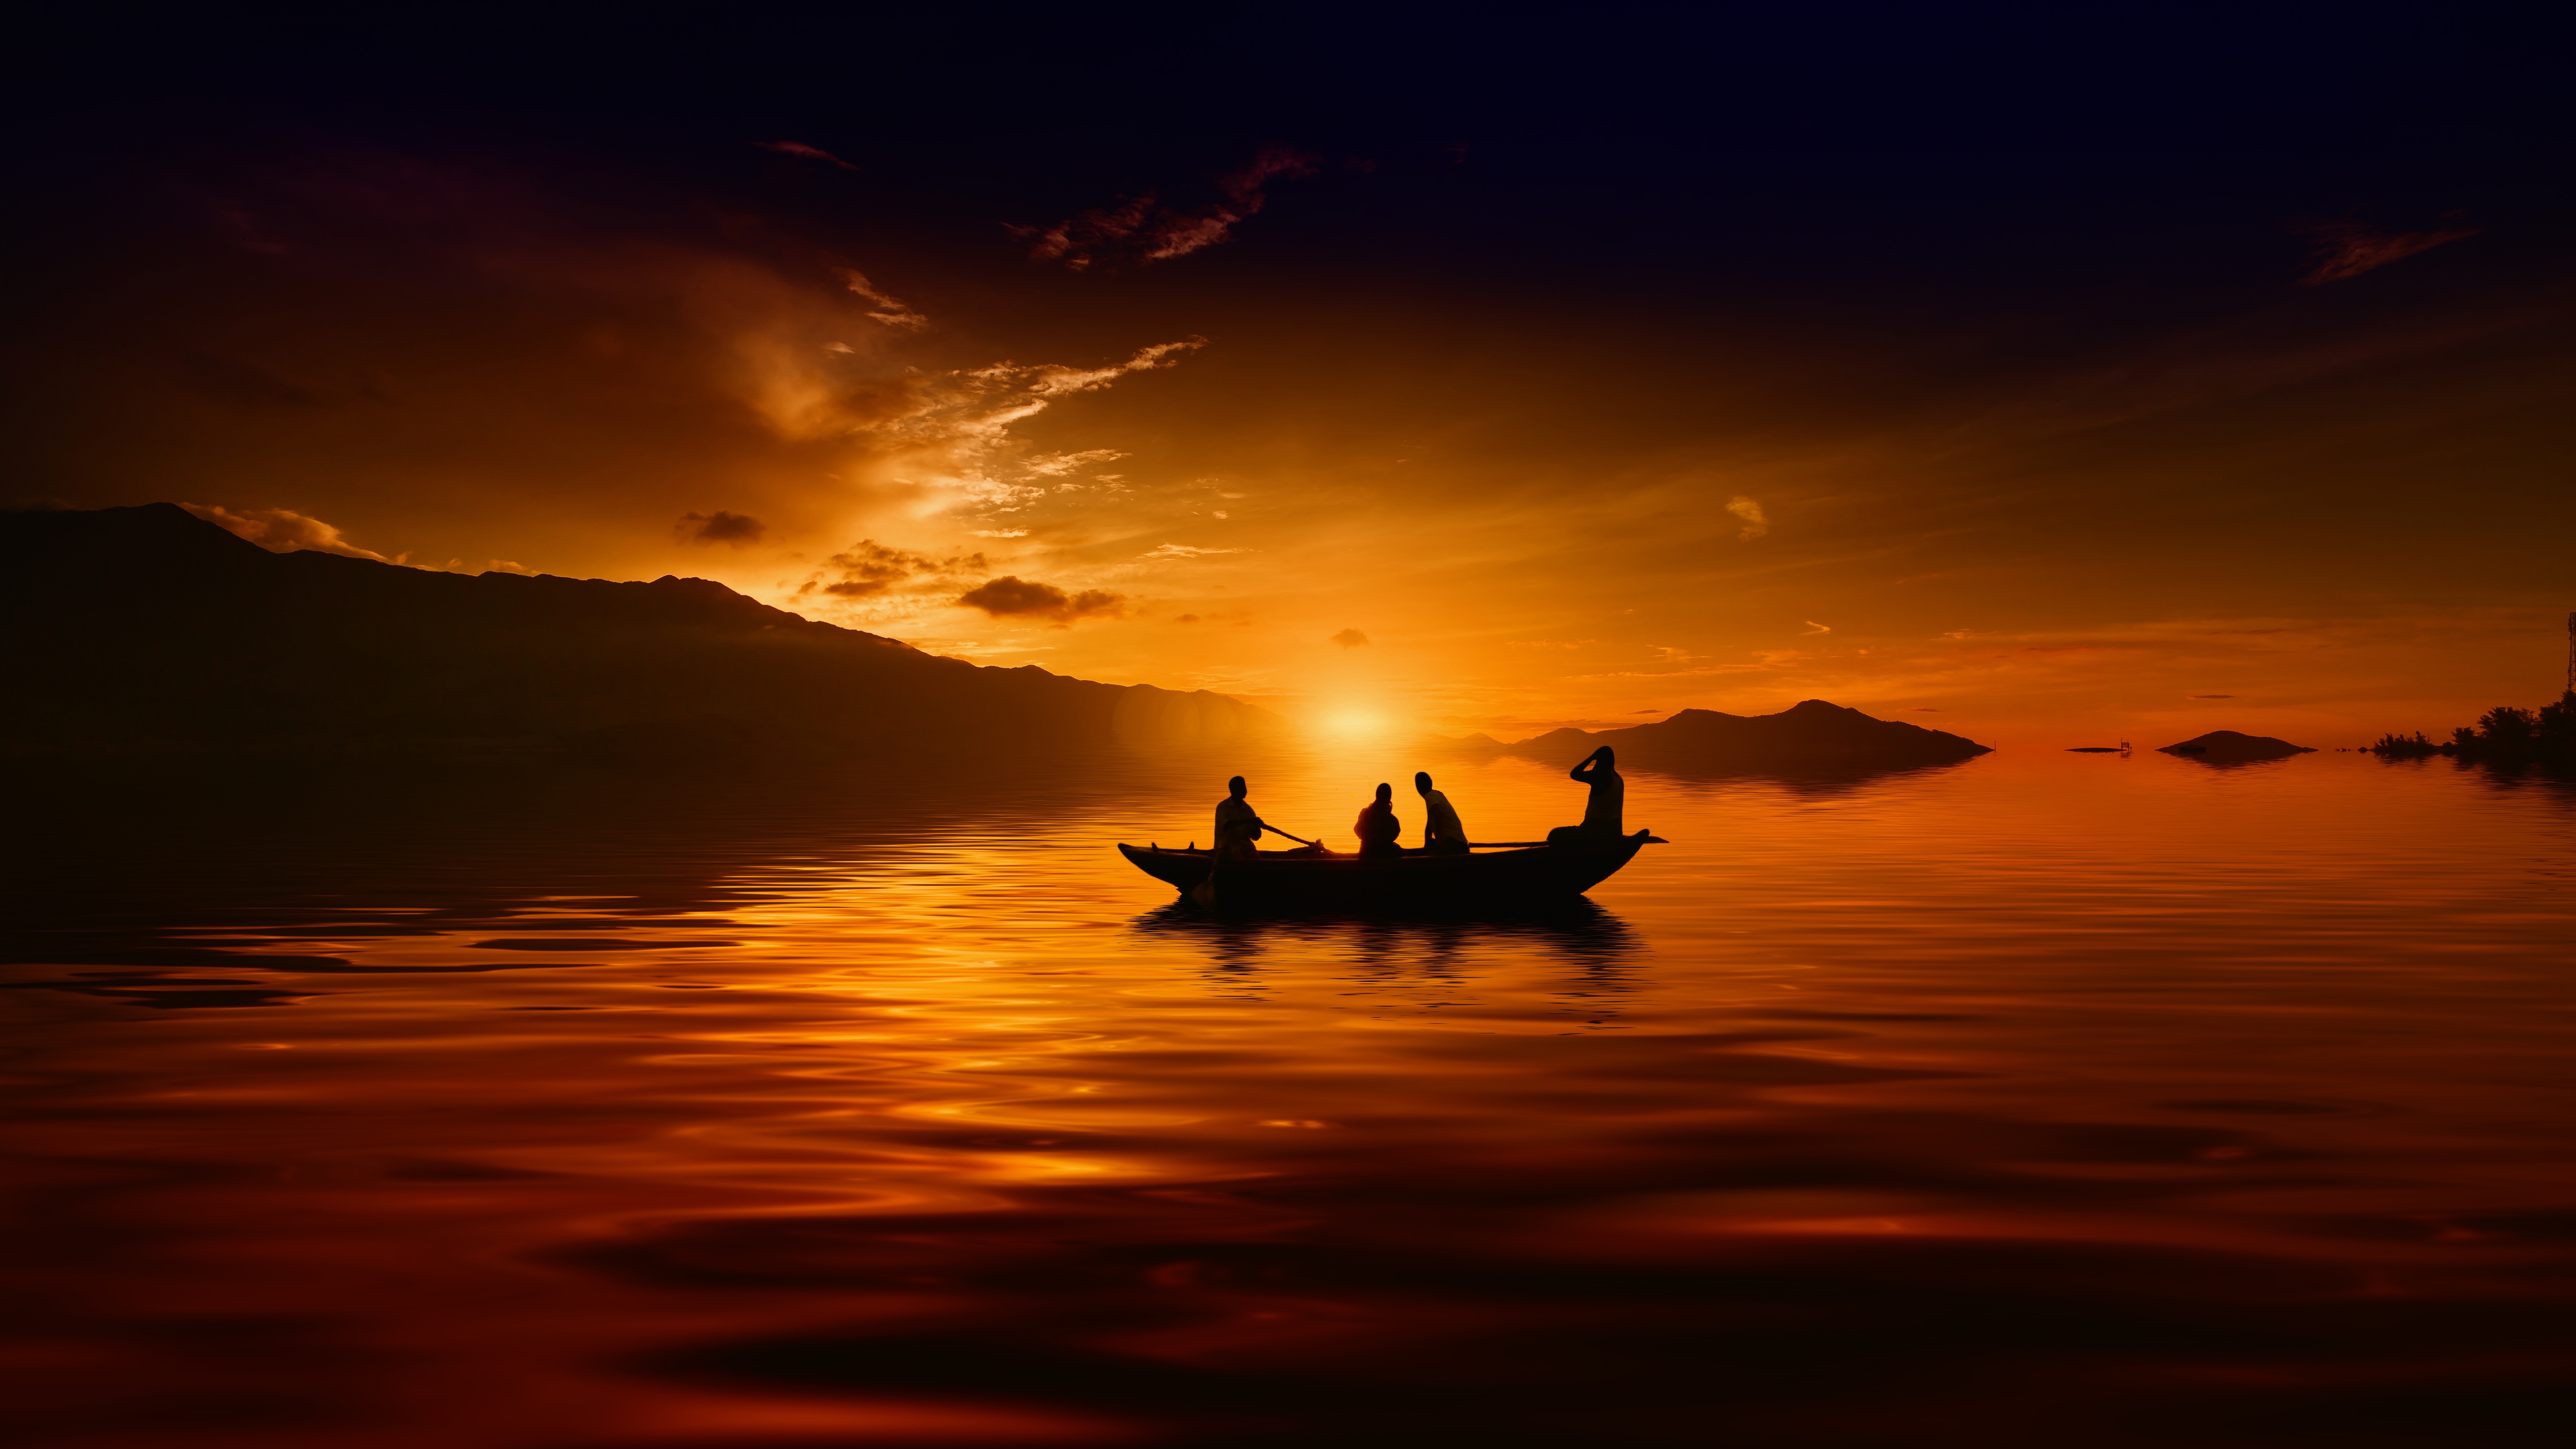 vehicles, canoe, lake, silhouette, sunset